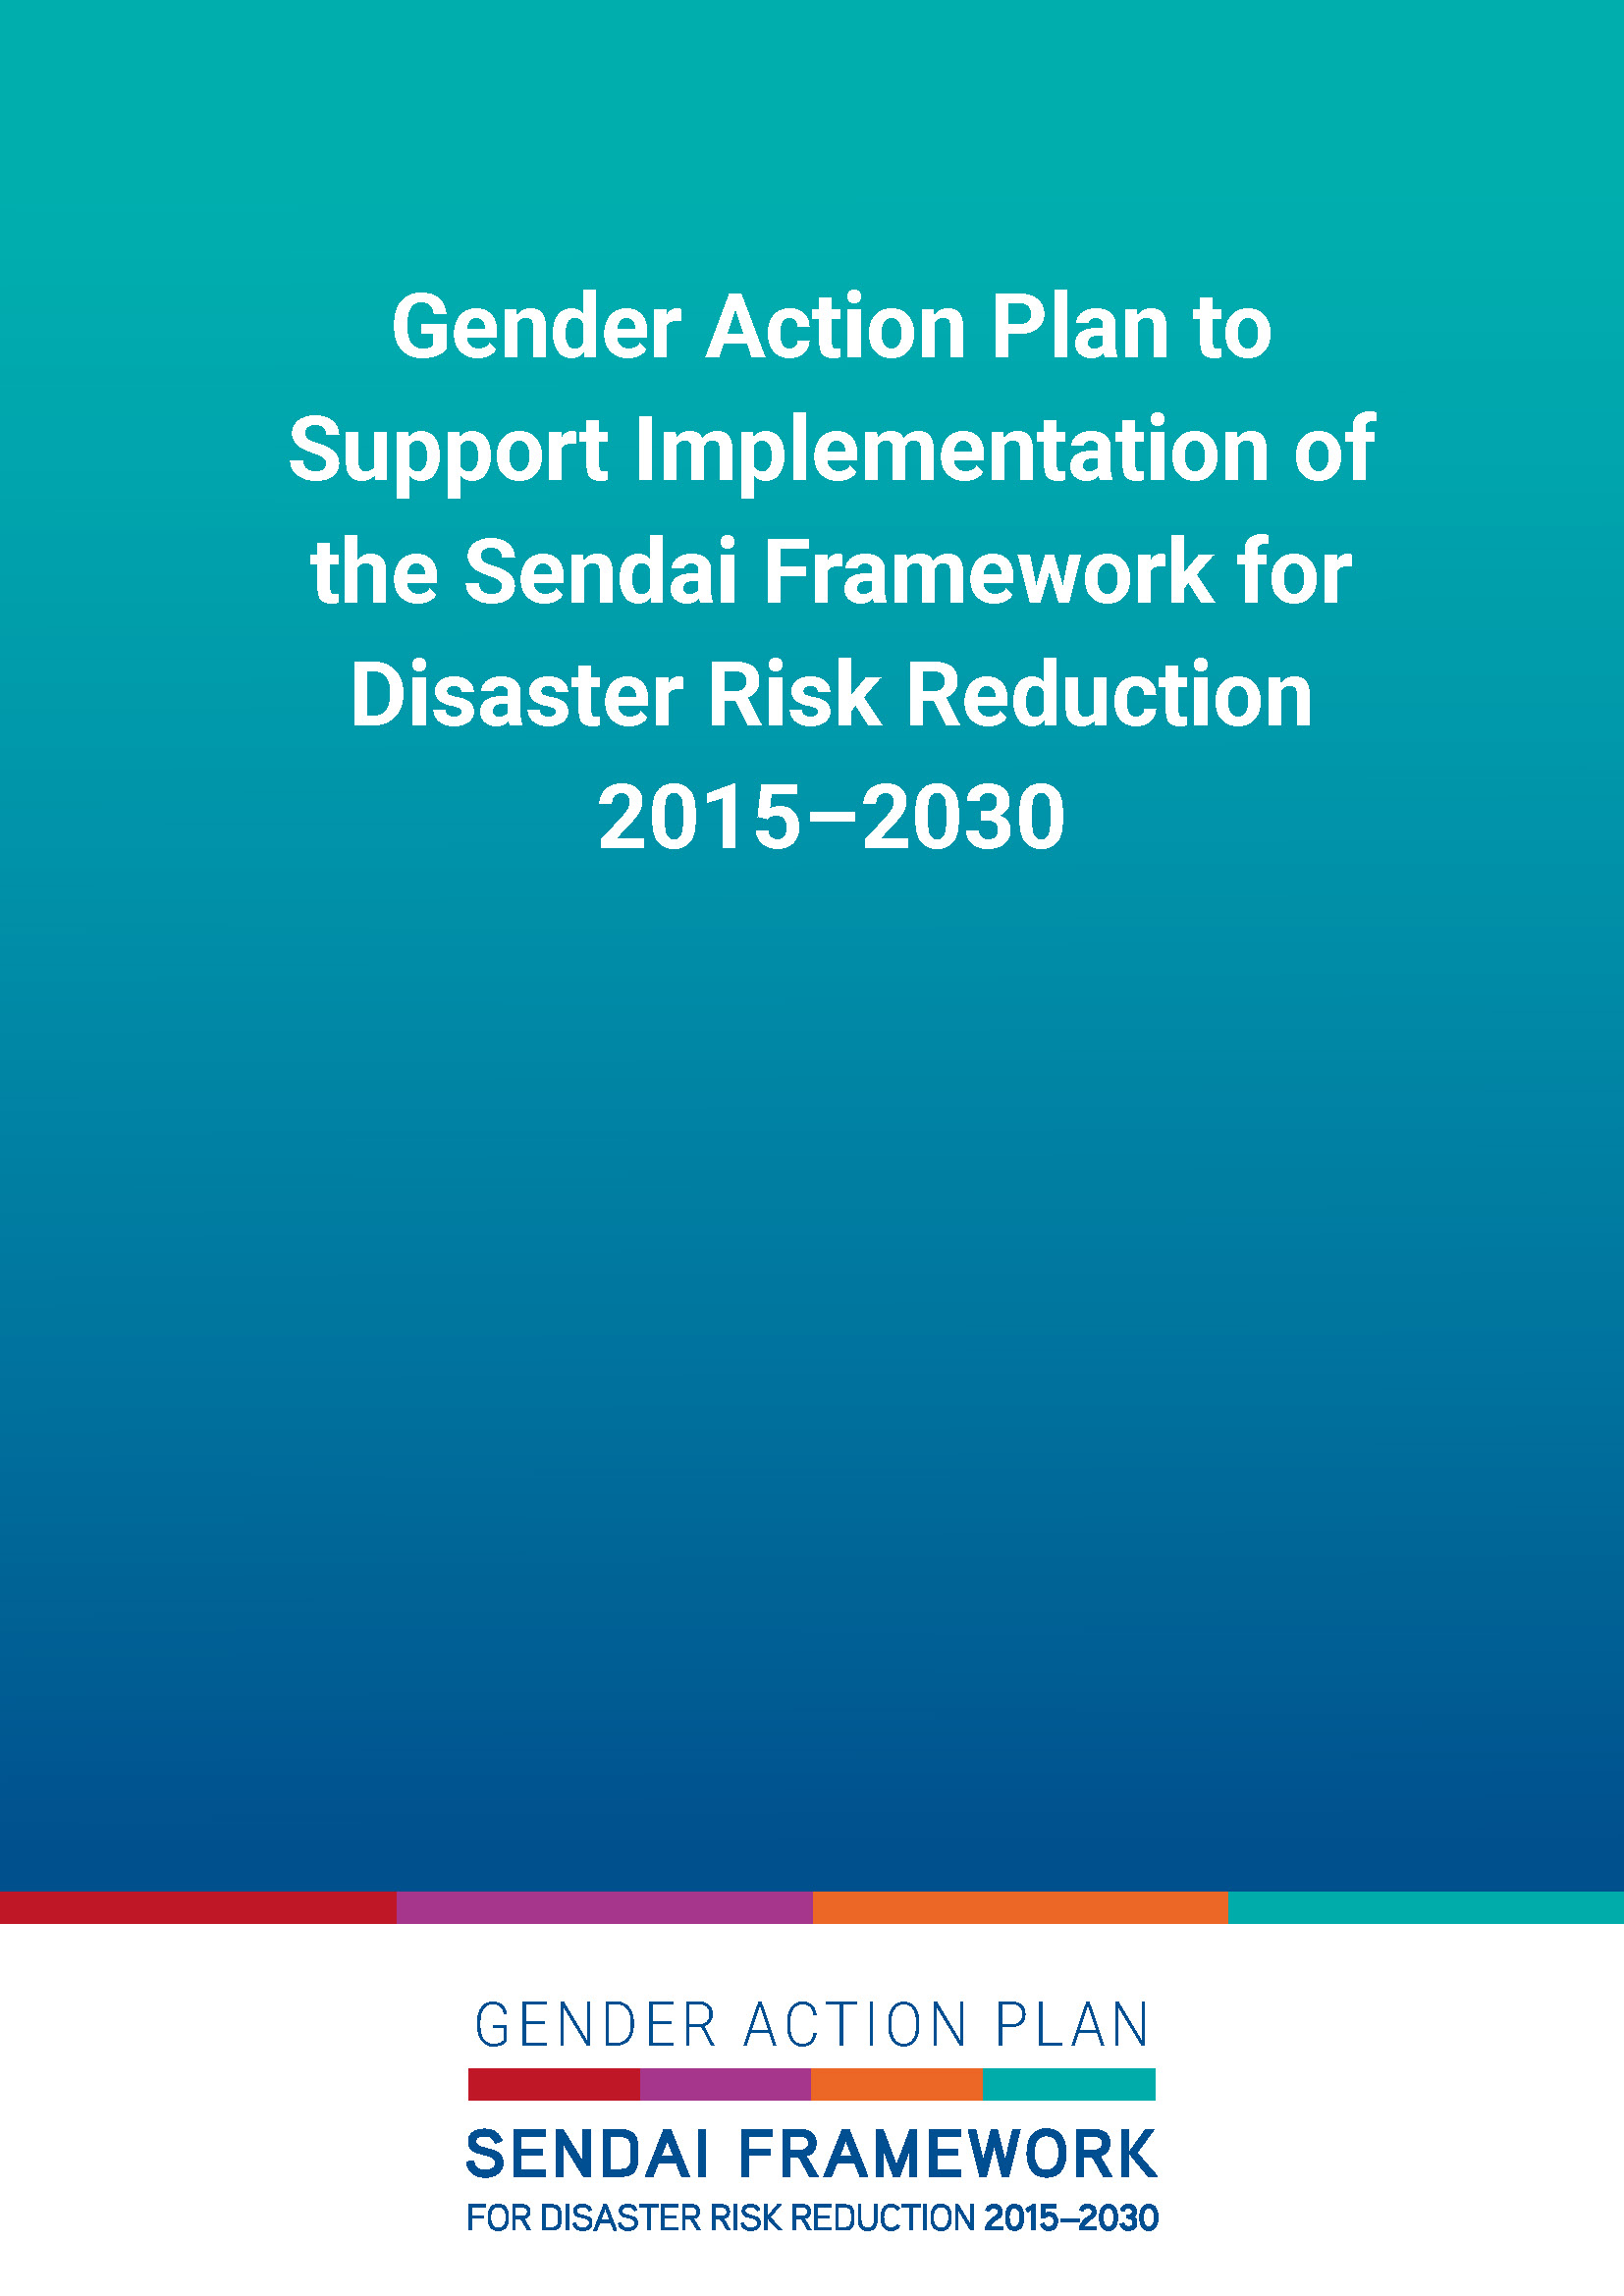 Gender Action Plan to Support Implementation of the Sendai Framework for Disaster Risk Reduction 2015-2030